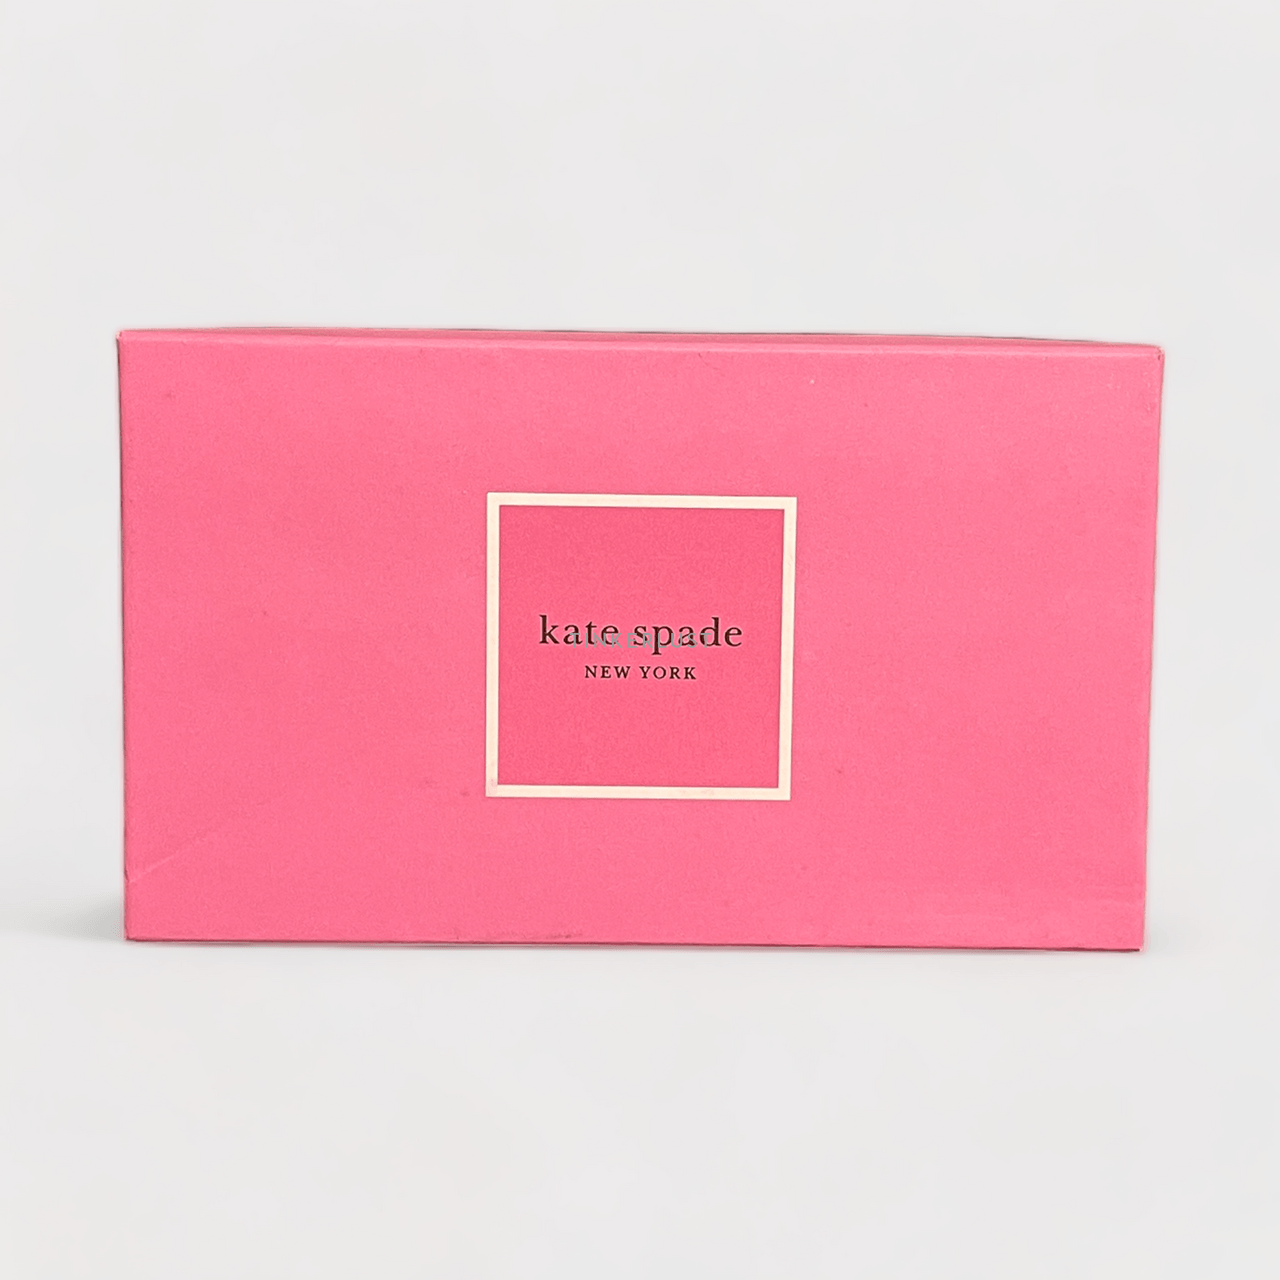 Kate Spade New York Pink Faux Fur Bag Strap